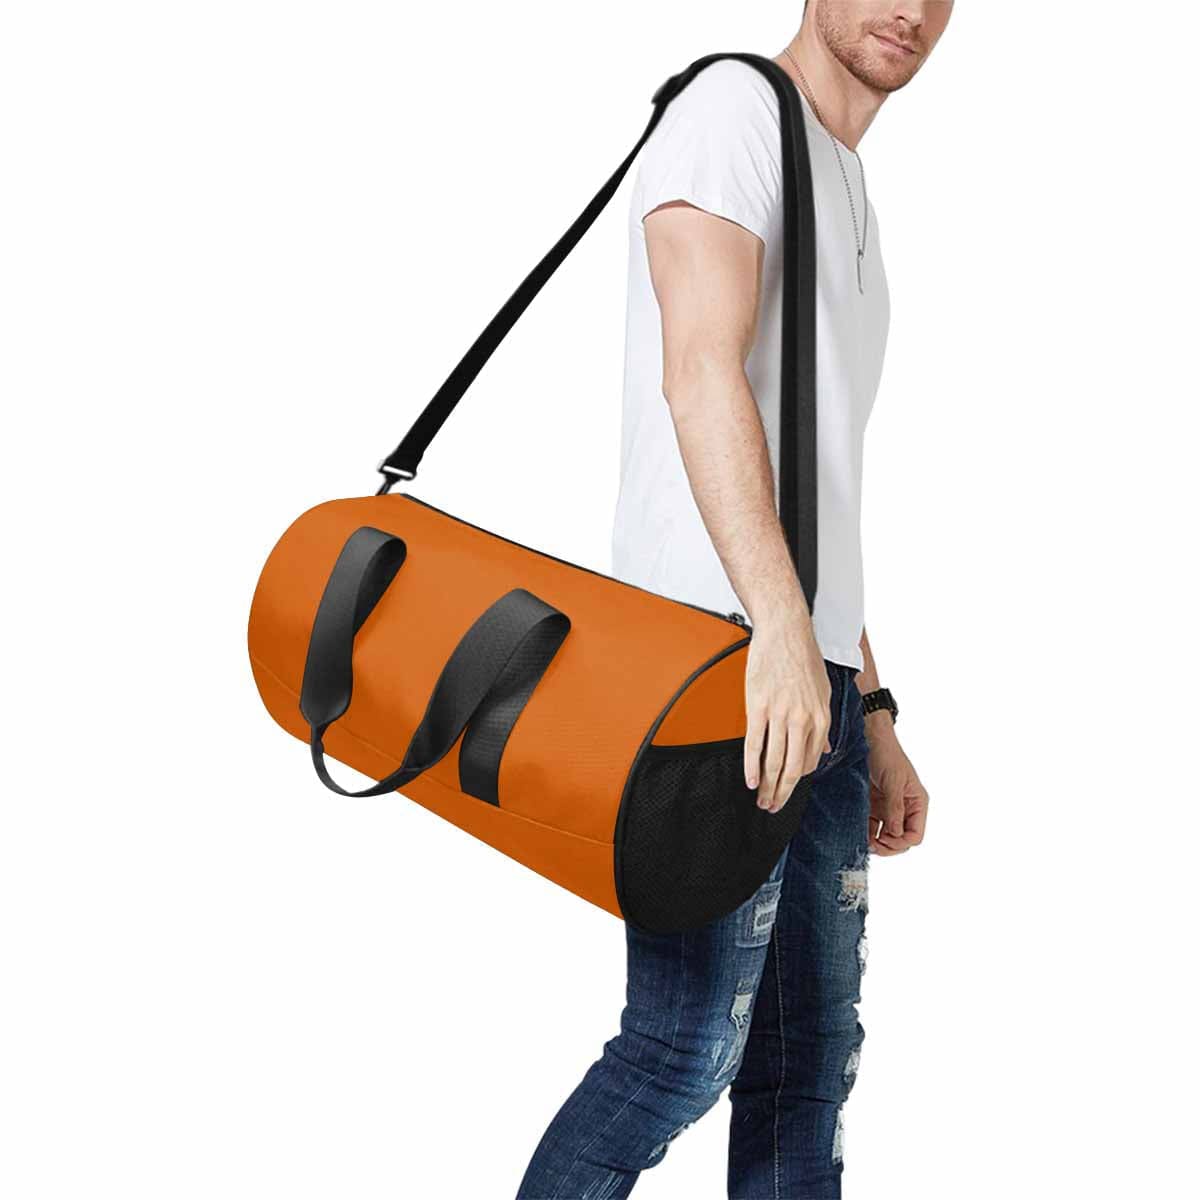 Duffel Bag Burnt Orange Travel Carry On - Bags | Duffel Bags